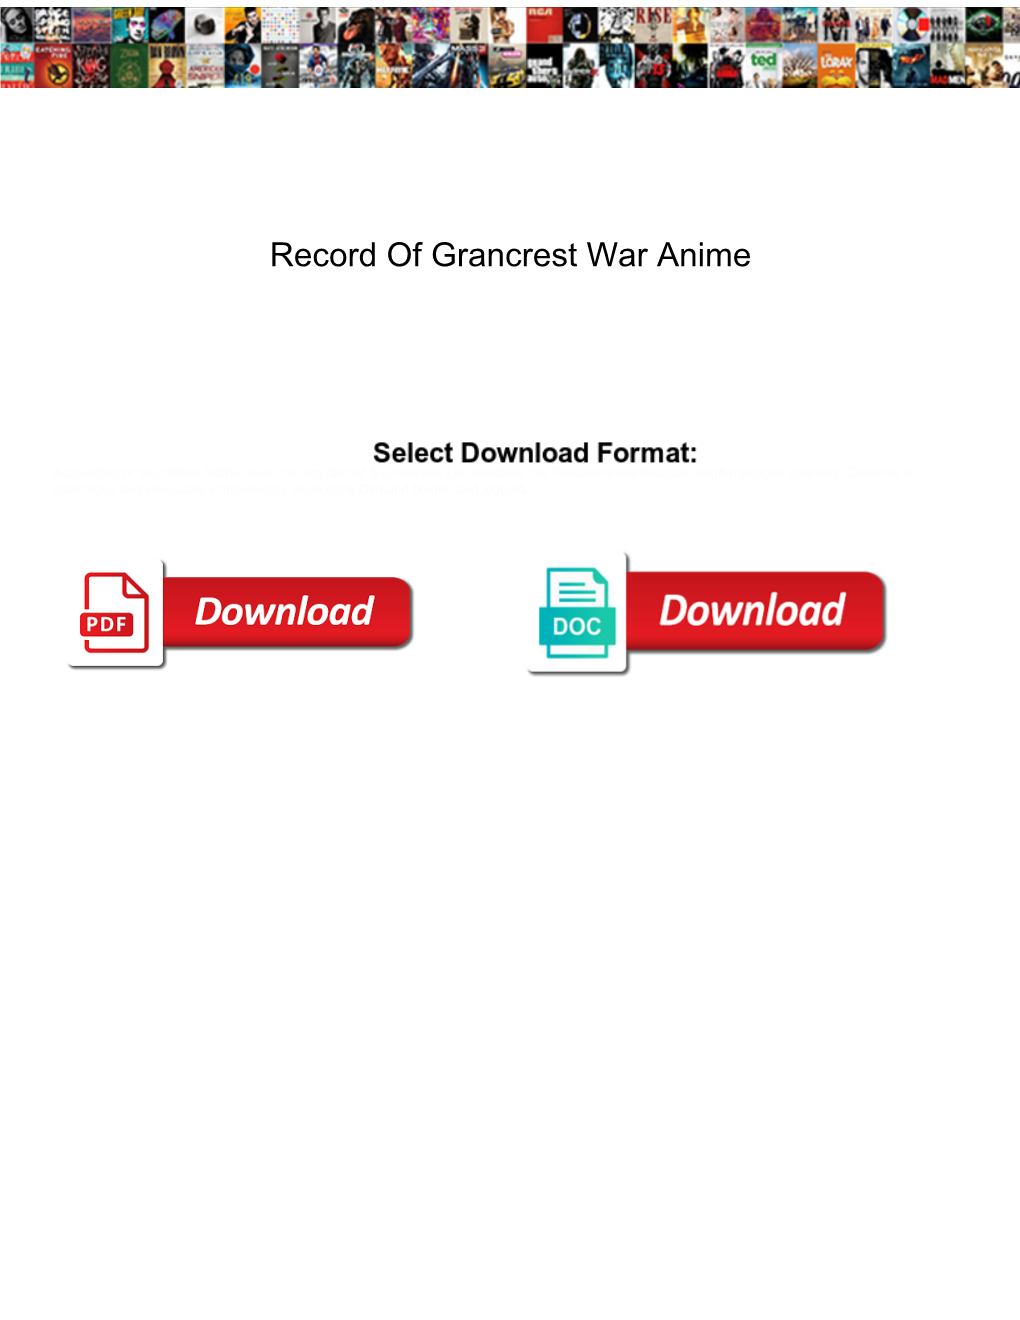 Record of Grancrest War Anime